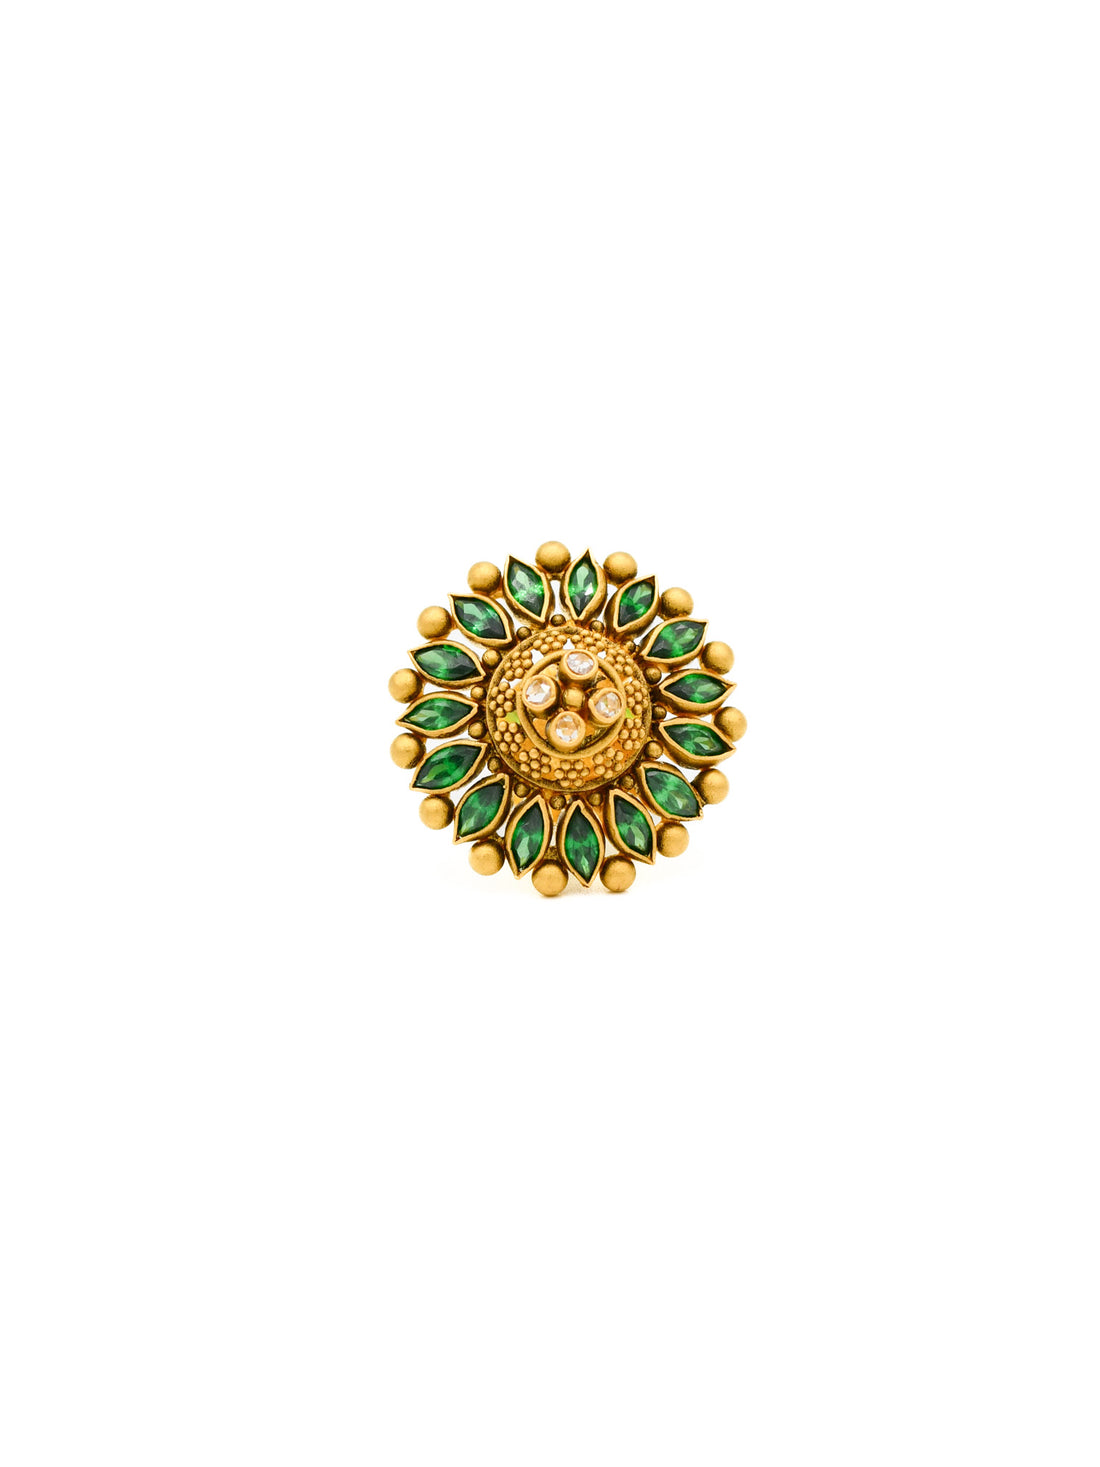 22ct Gold Green CZ Antique Stud Earrings - Roop Darshan